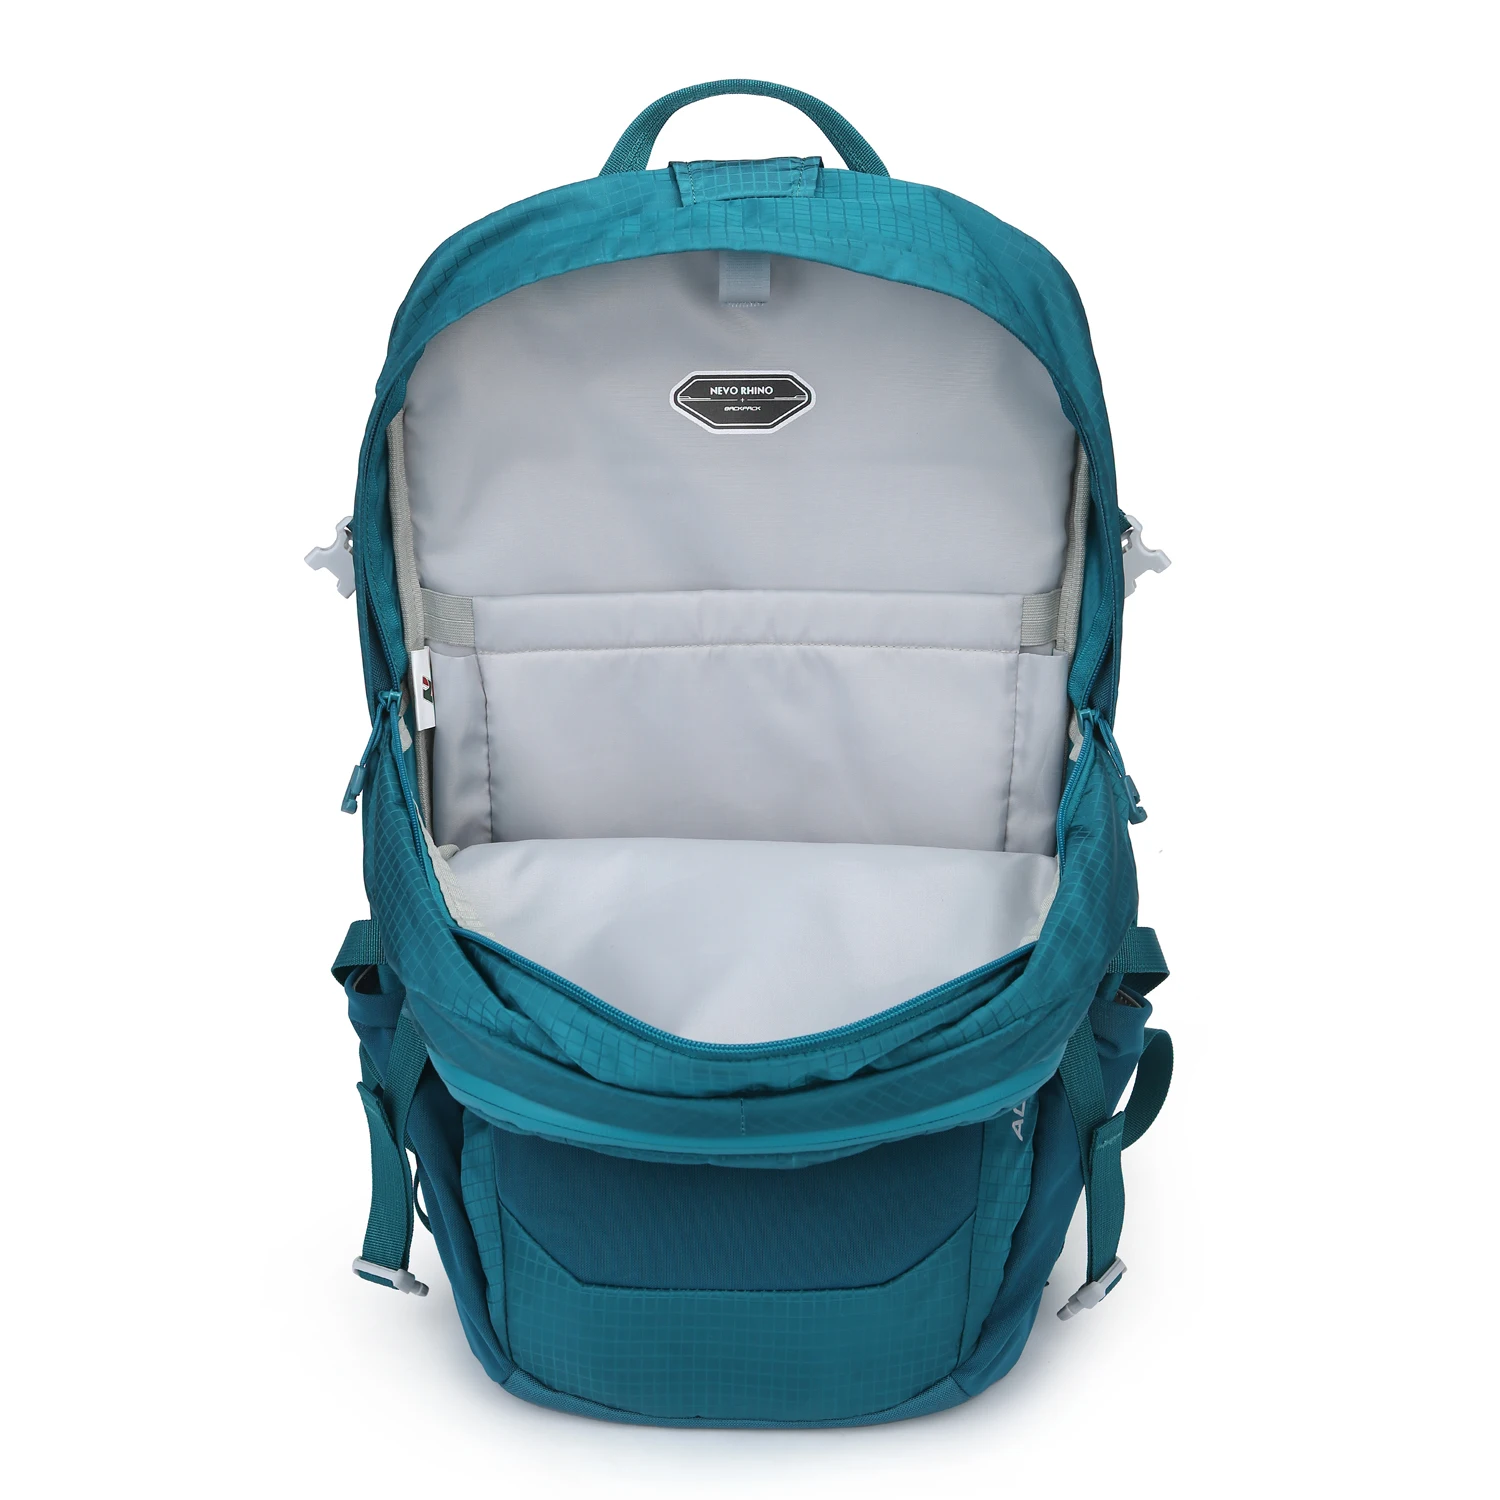 Рюкзак NEVO RHINO 30L для путешествий на открытом воздухе, походов, рюкзаков, рюкзаков, сумок для спорта, туризма, трекинга, рюкзаков